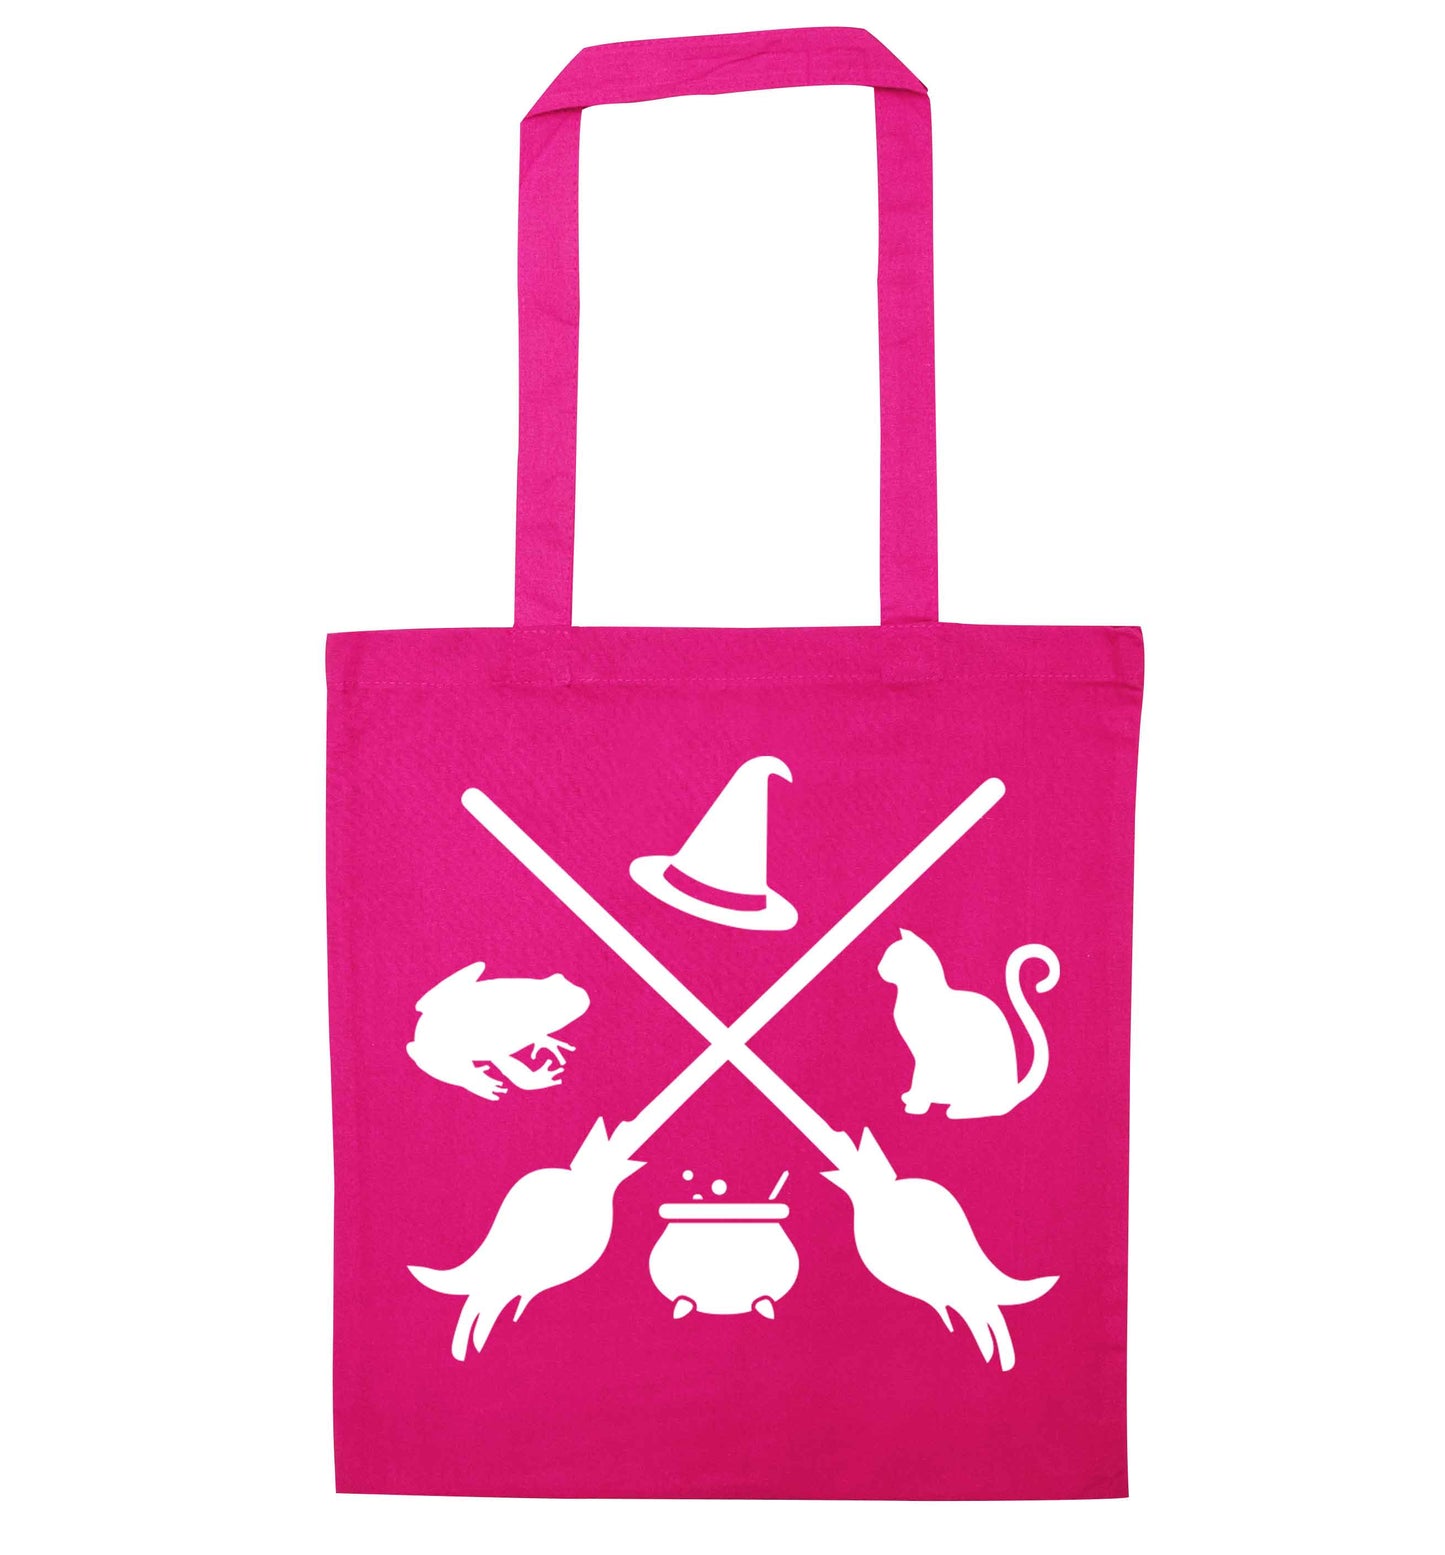 Witch symbol pink tote bag